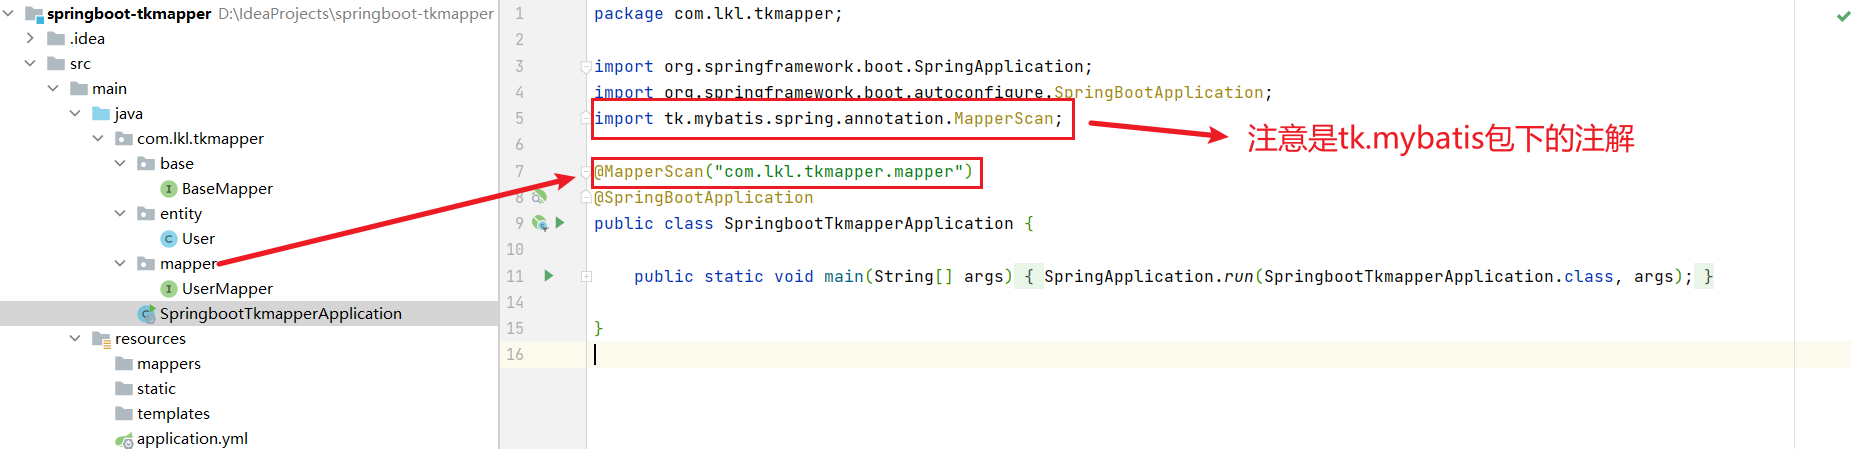 springboot集成tkmapper及基本使用教程插图1